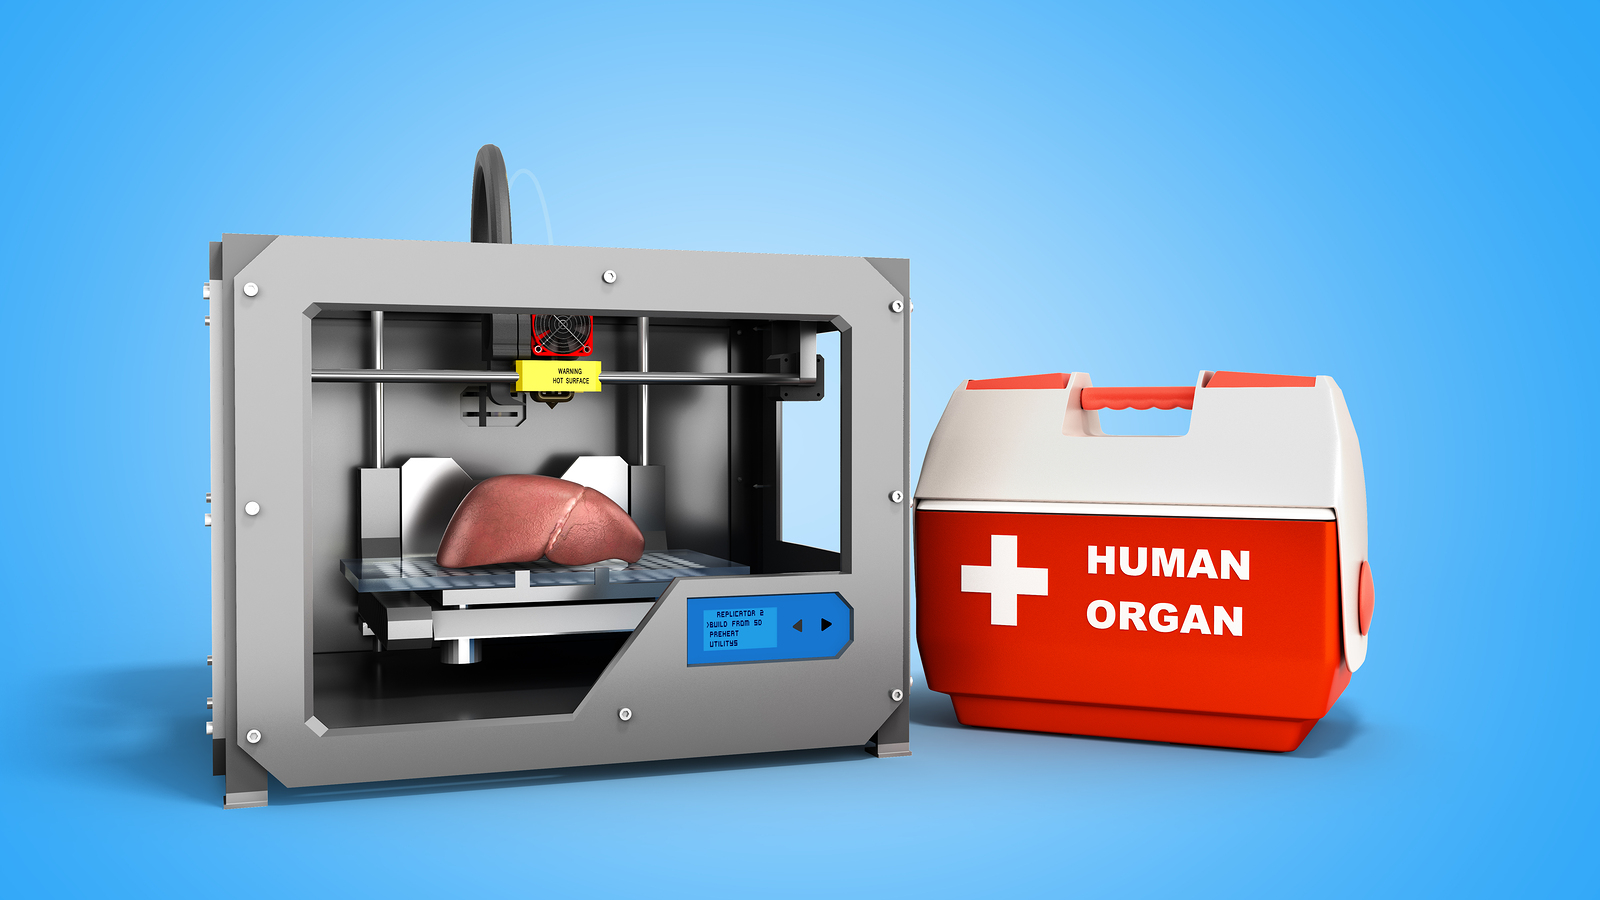 Las bioimpresoras 3D modelan objetos con fluidos. Investigadores experimentan con esta tecnología con el fin de algún día poder imprimir órganos humanos. - Foto: Bigstock